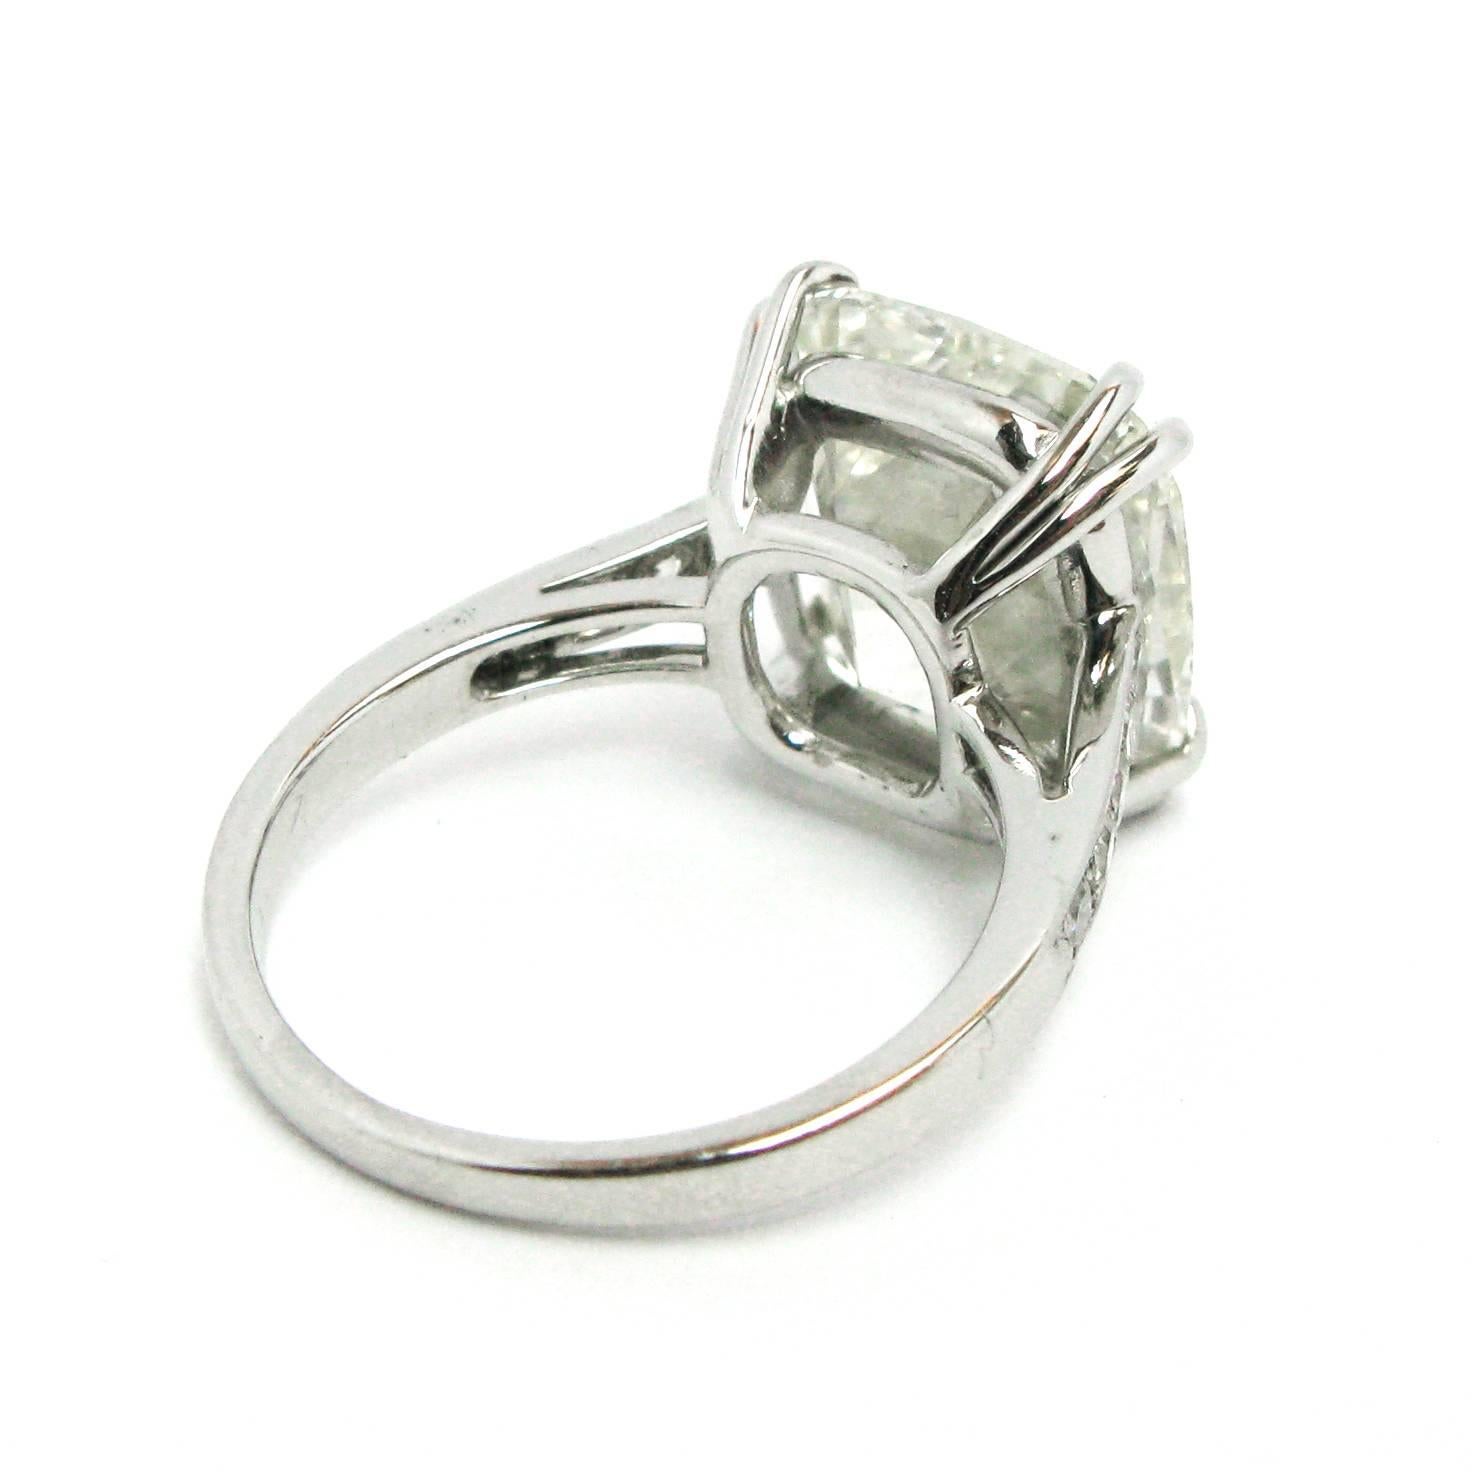 7 carat cushion cut diamond ring